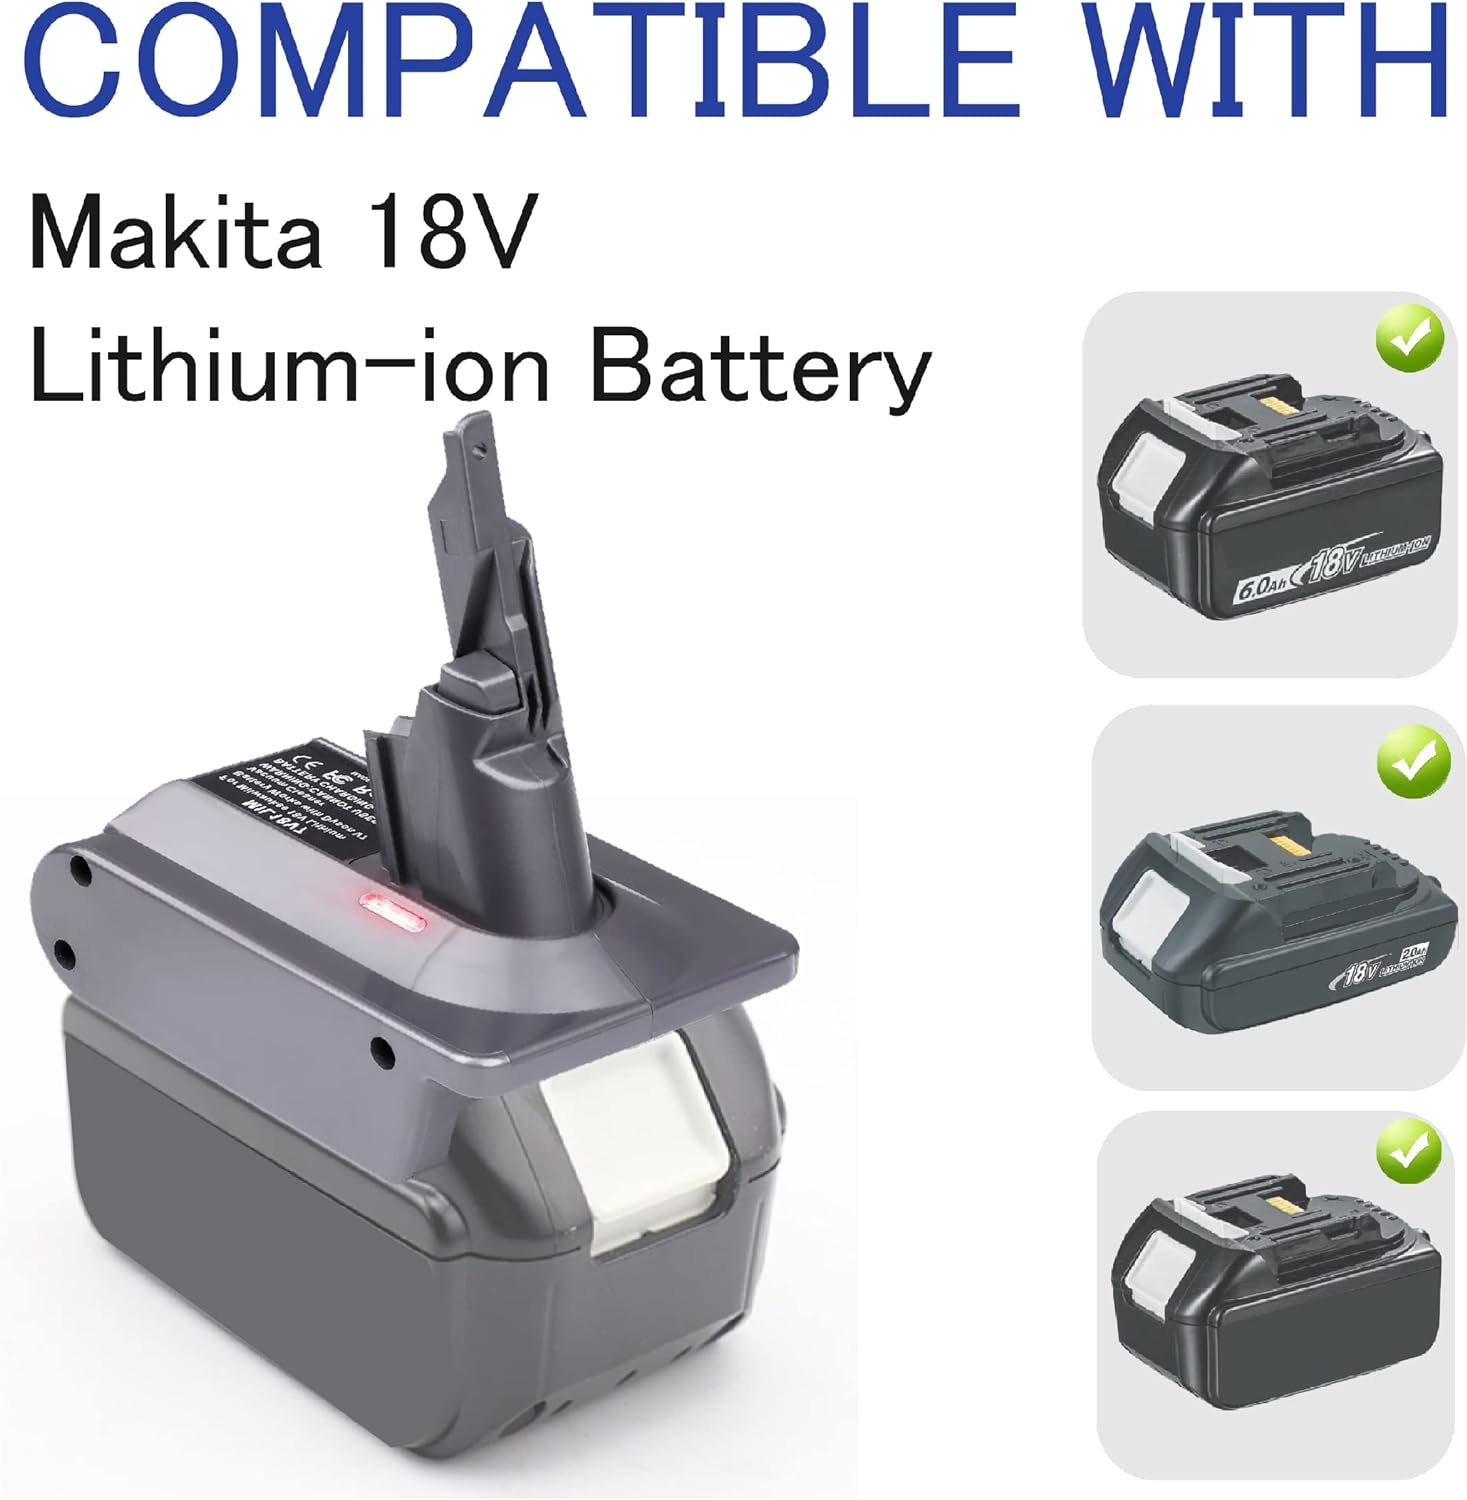 Dalset Bekend duidelijk EID iSH09-M594407mn V7 Adapter for Makita 18V Lithium-ionBattery Convert to  for Dyson V7 Tool use, for Makita 18V BL1830 BL1850 Battery Compatible